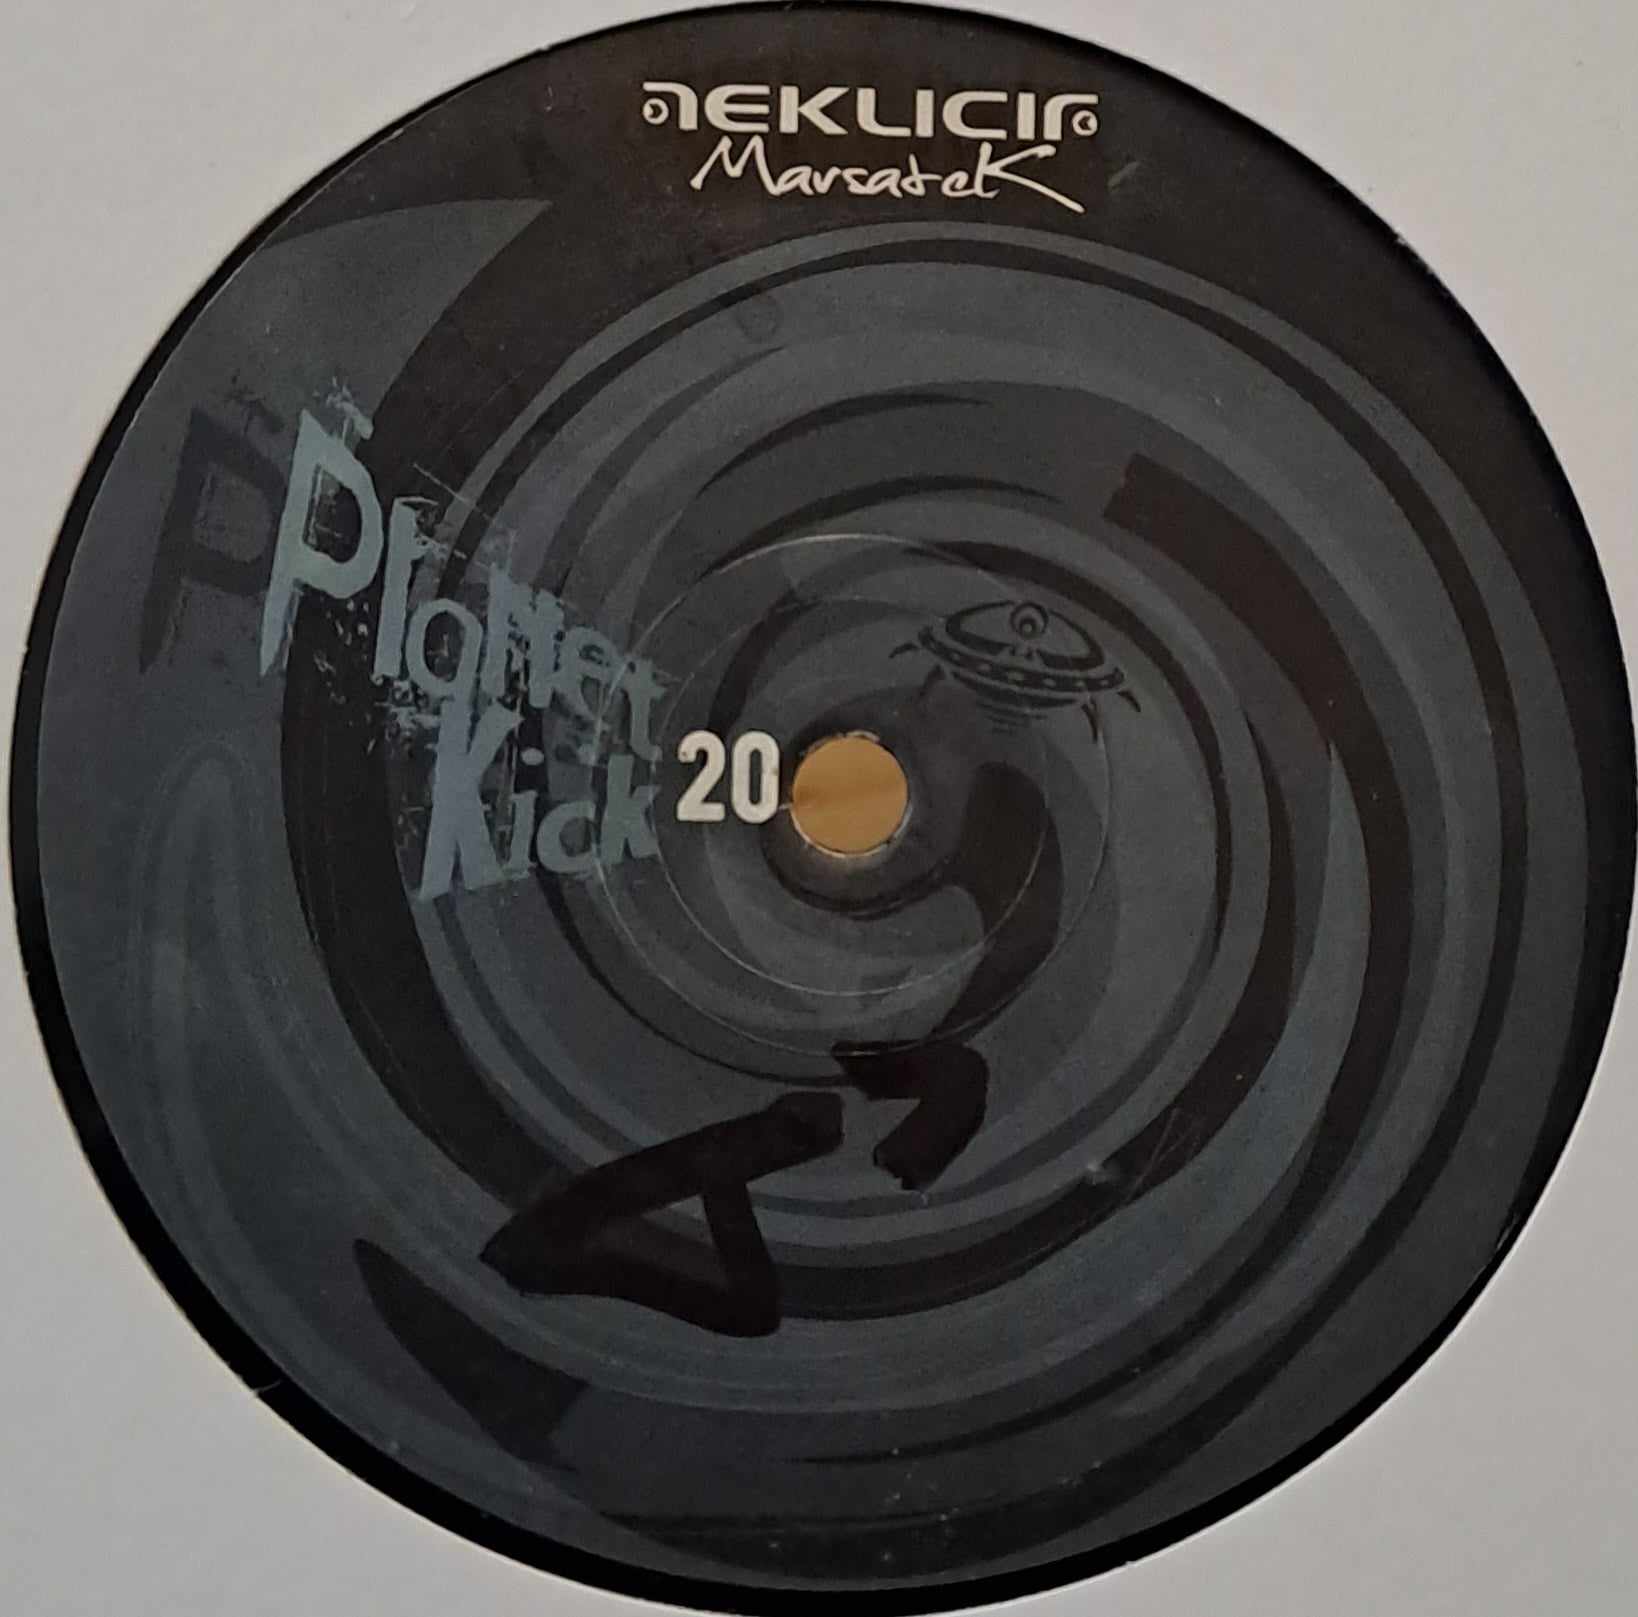 Planet Kick 20 - vinyle freetekno